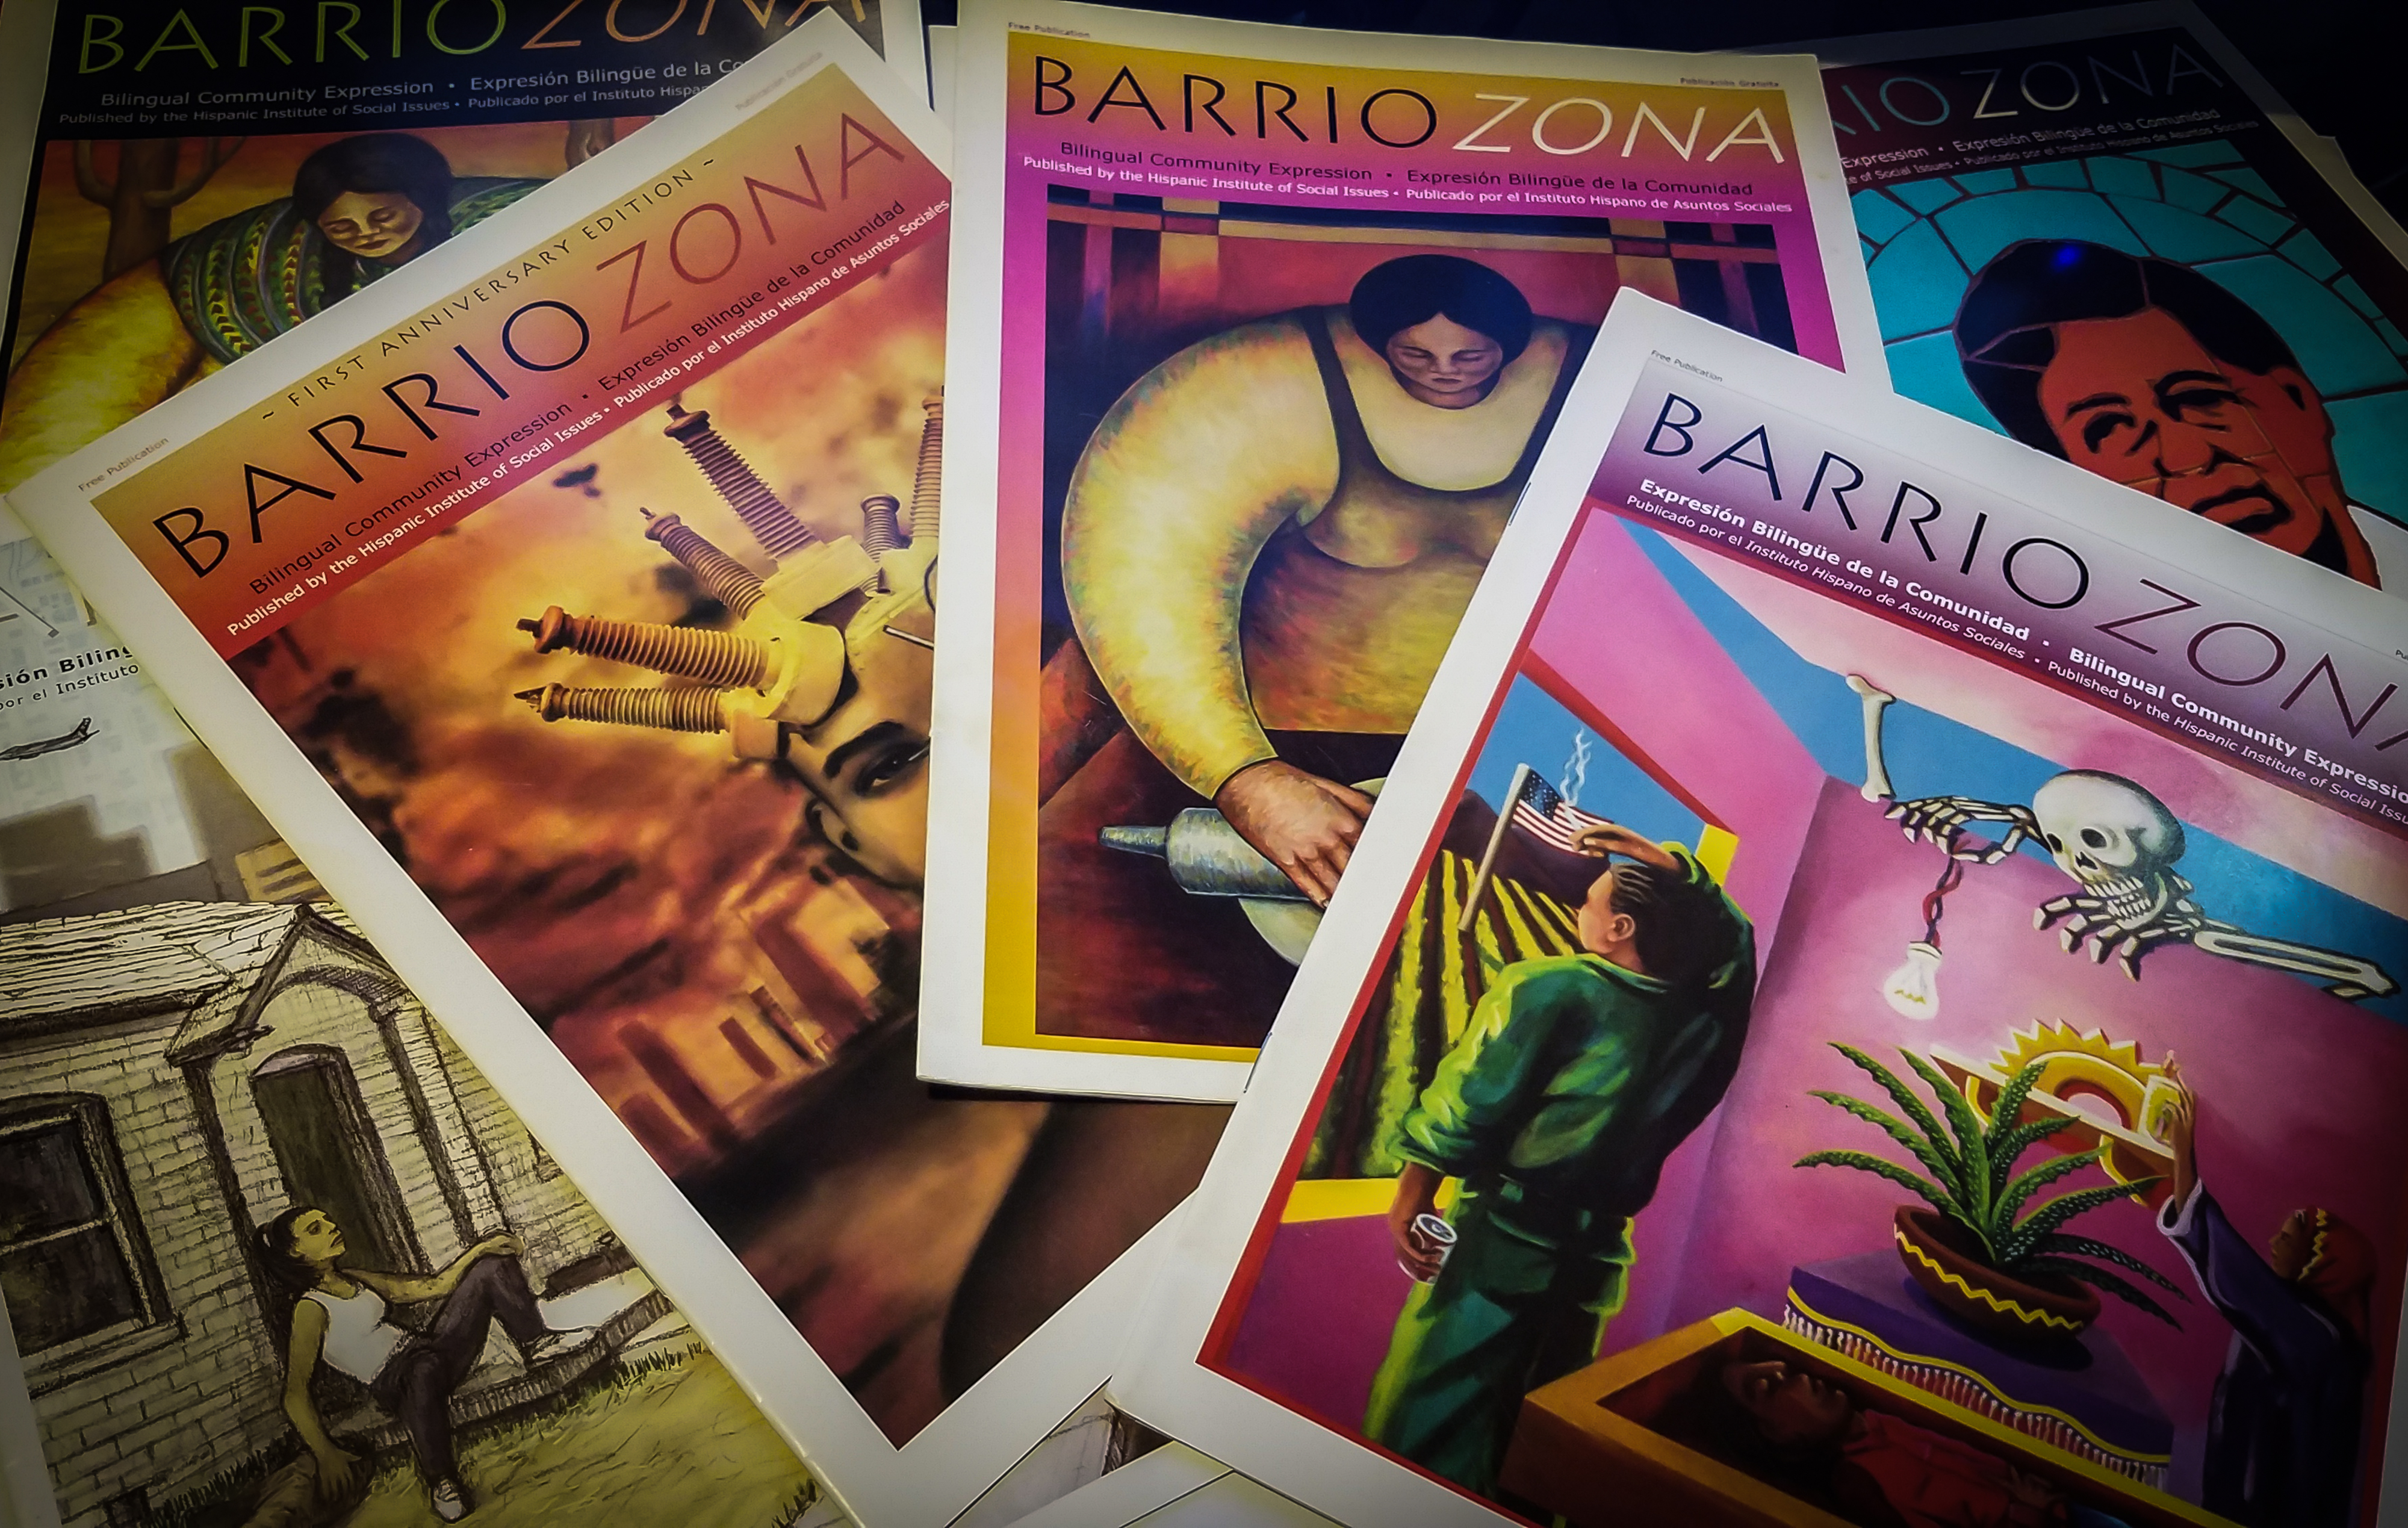 Barriozona Magazine covers